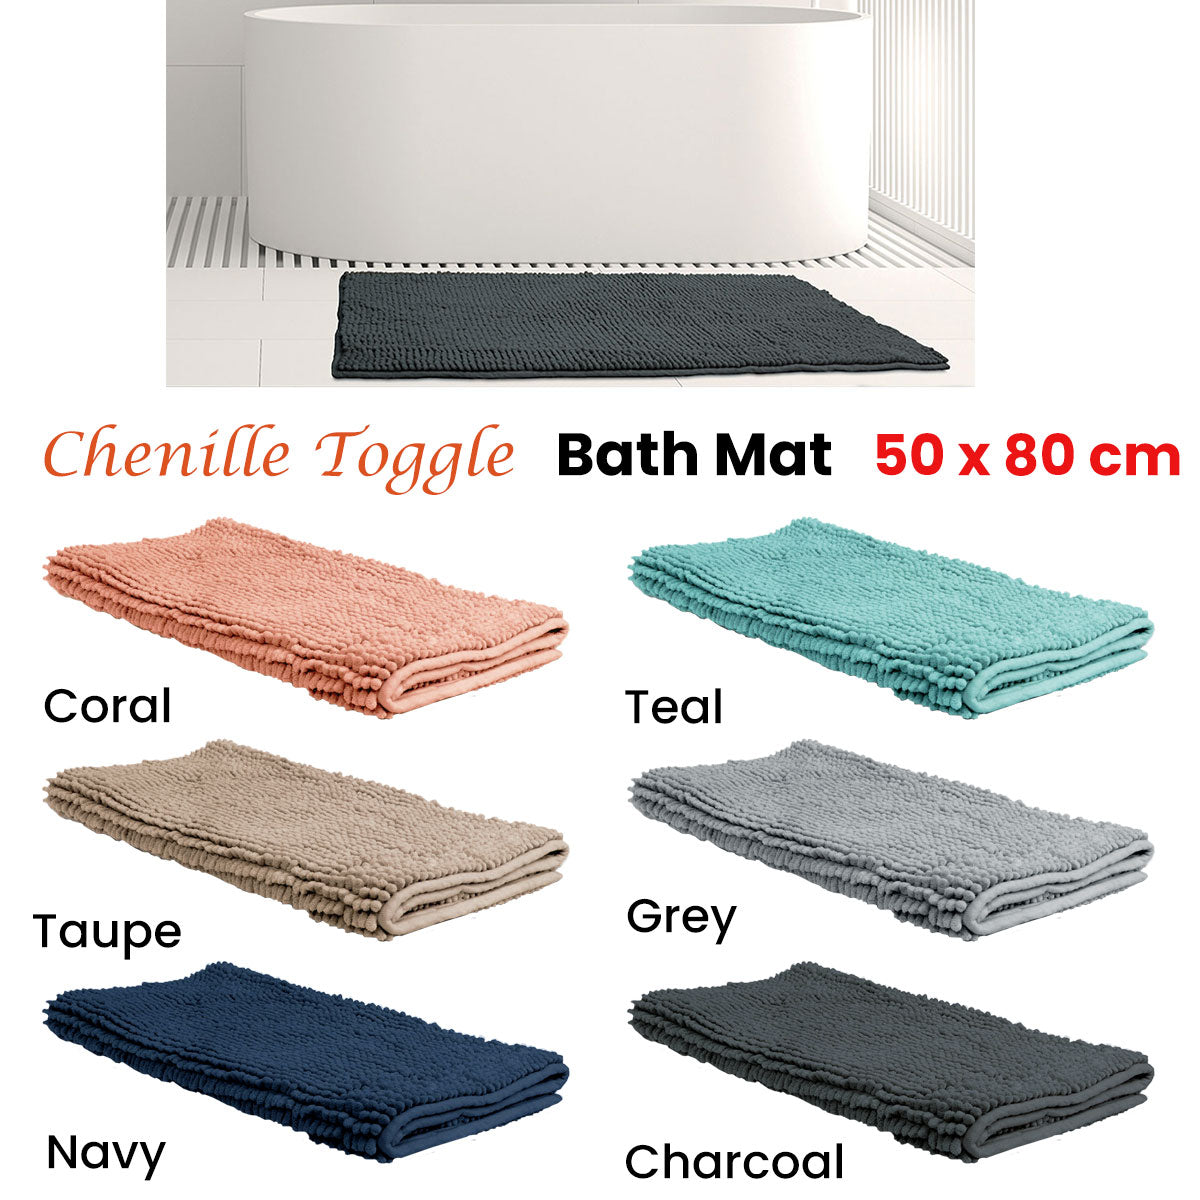 Chenille Toggle Bath Mat 50 x 80cm Navy